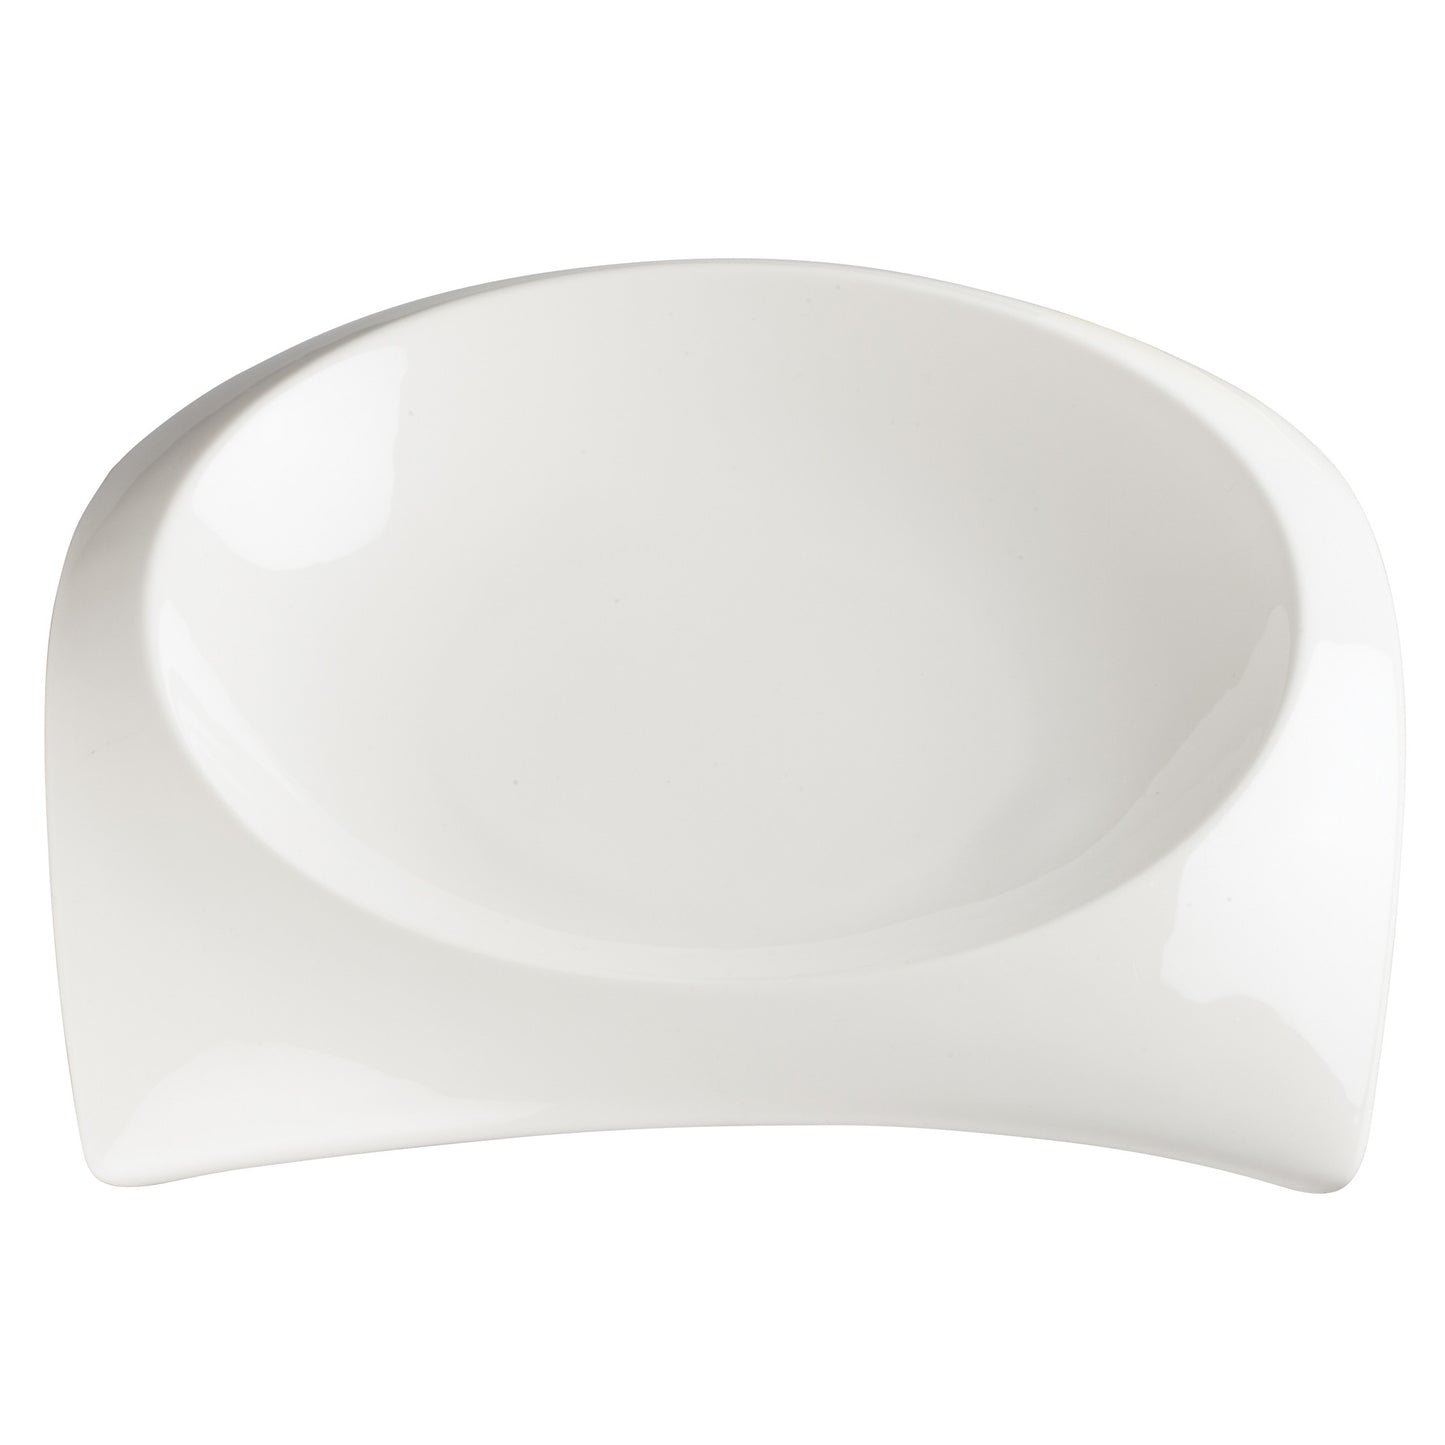 WDP005-103 - 10"Sq (8-1/2" Dia) Porcelain Square Deep Bowl, Bright White, 12 pcs/case